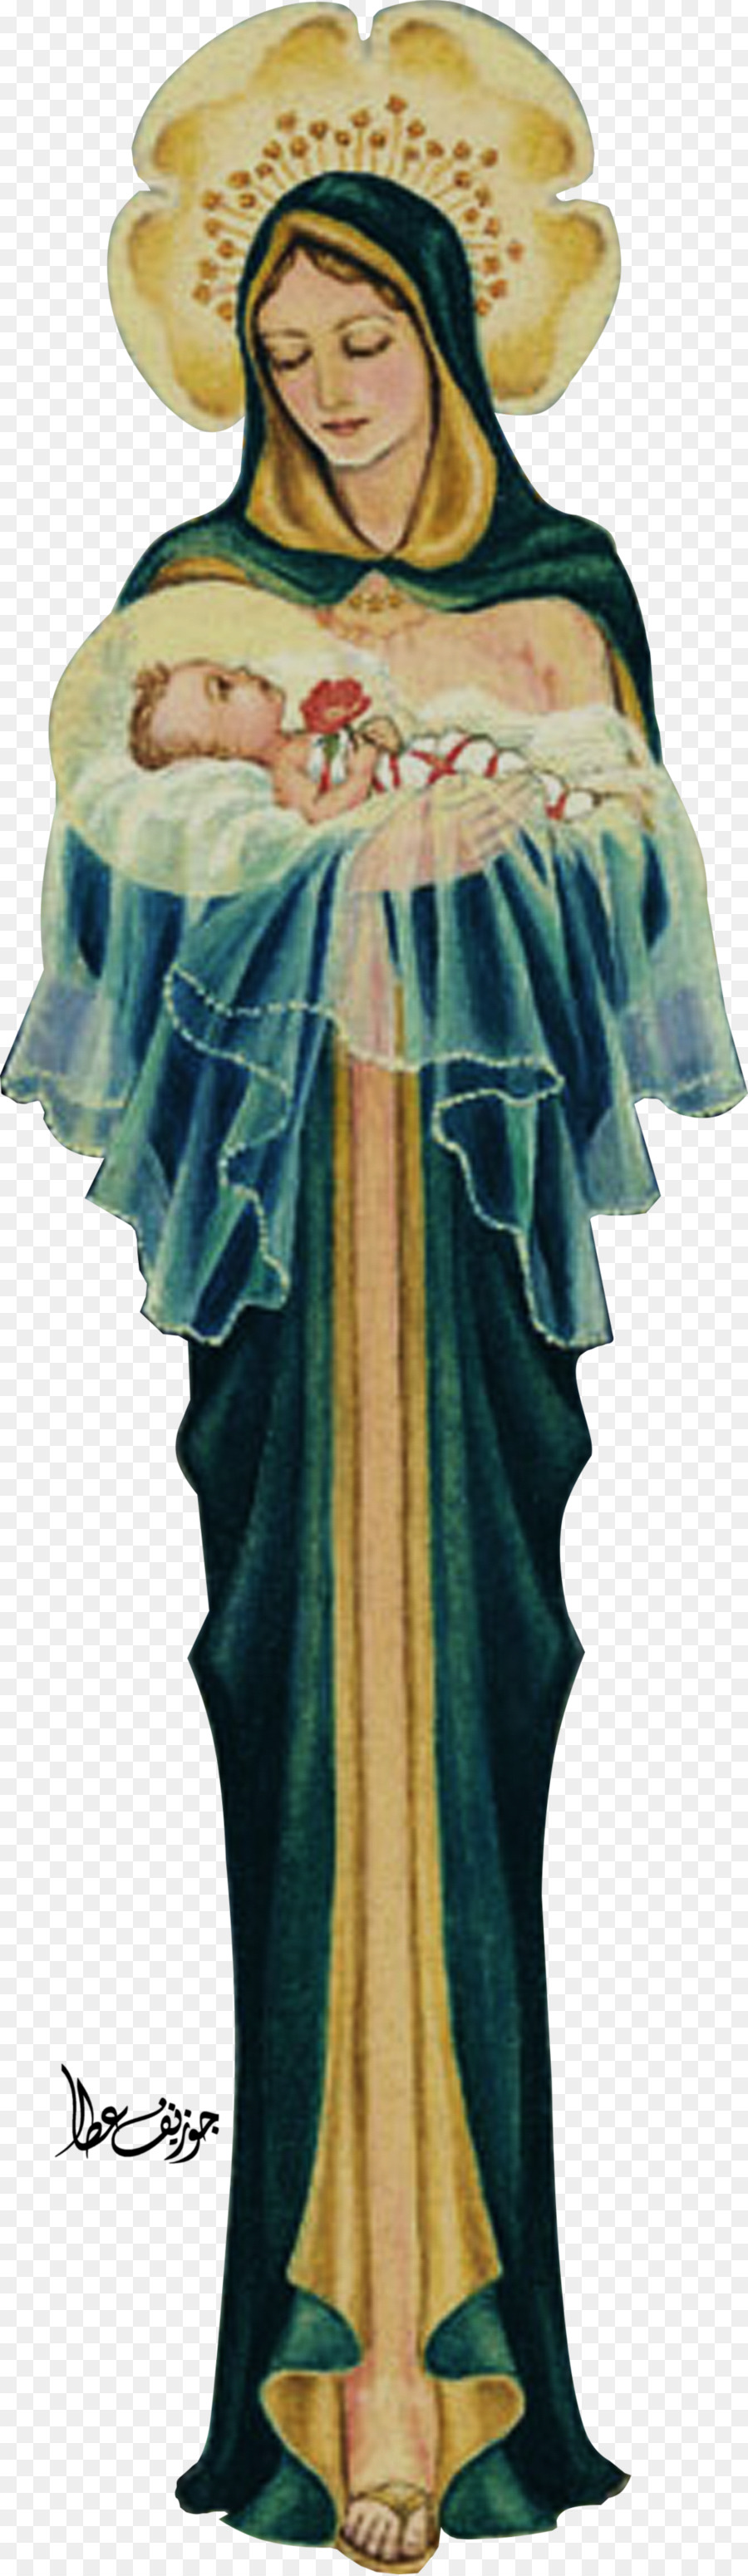 Kostüm-design-Rosa-Mystica-Engel M - jesus Maria